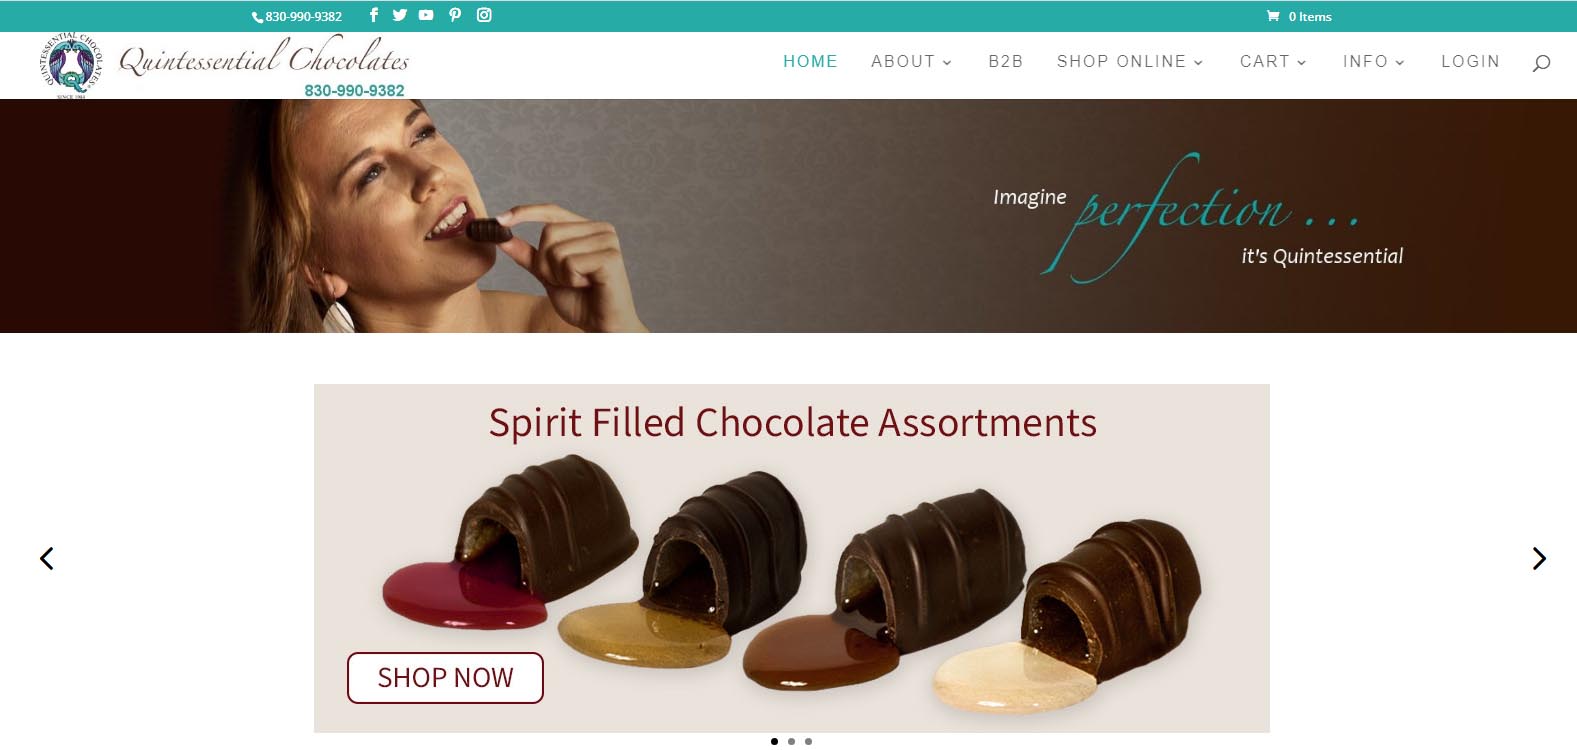 New Wholesale Site for Quintessential Chocolates